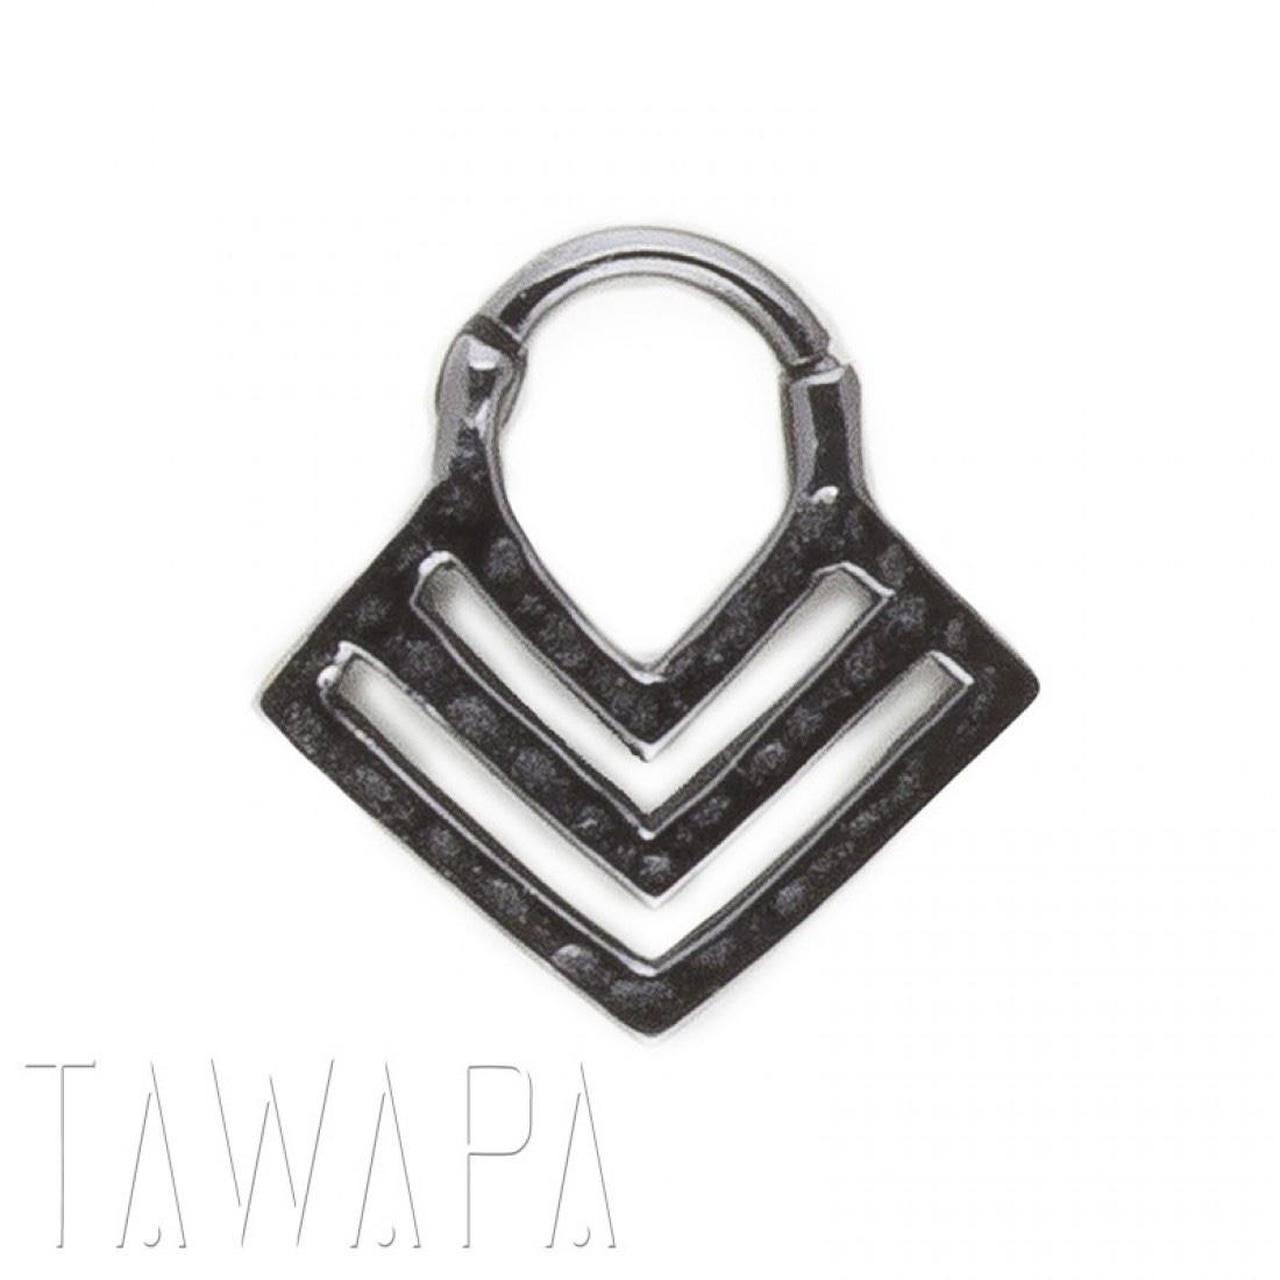 Product Image 2 - Tawapa chevron septum ring ✨
comes